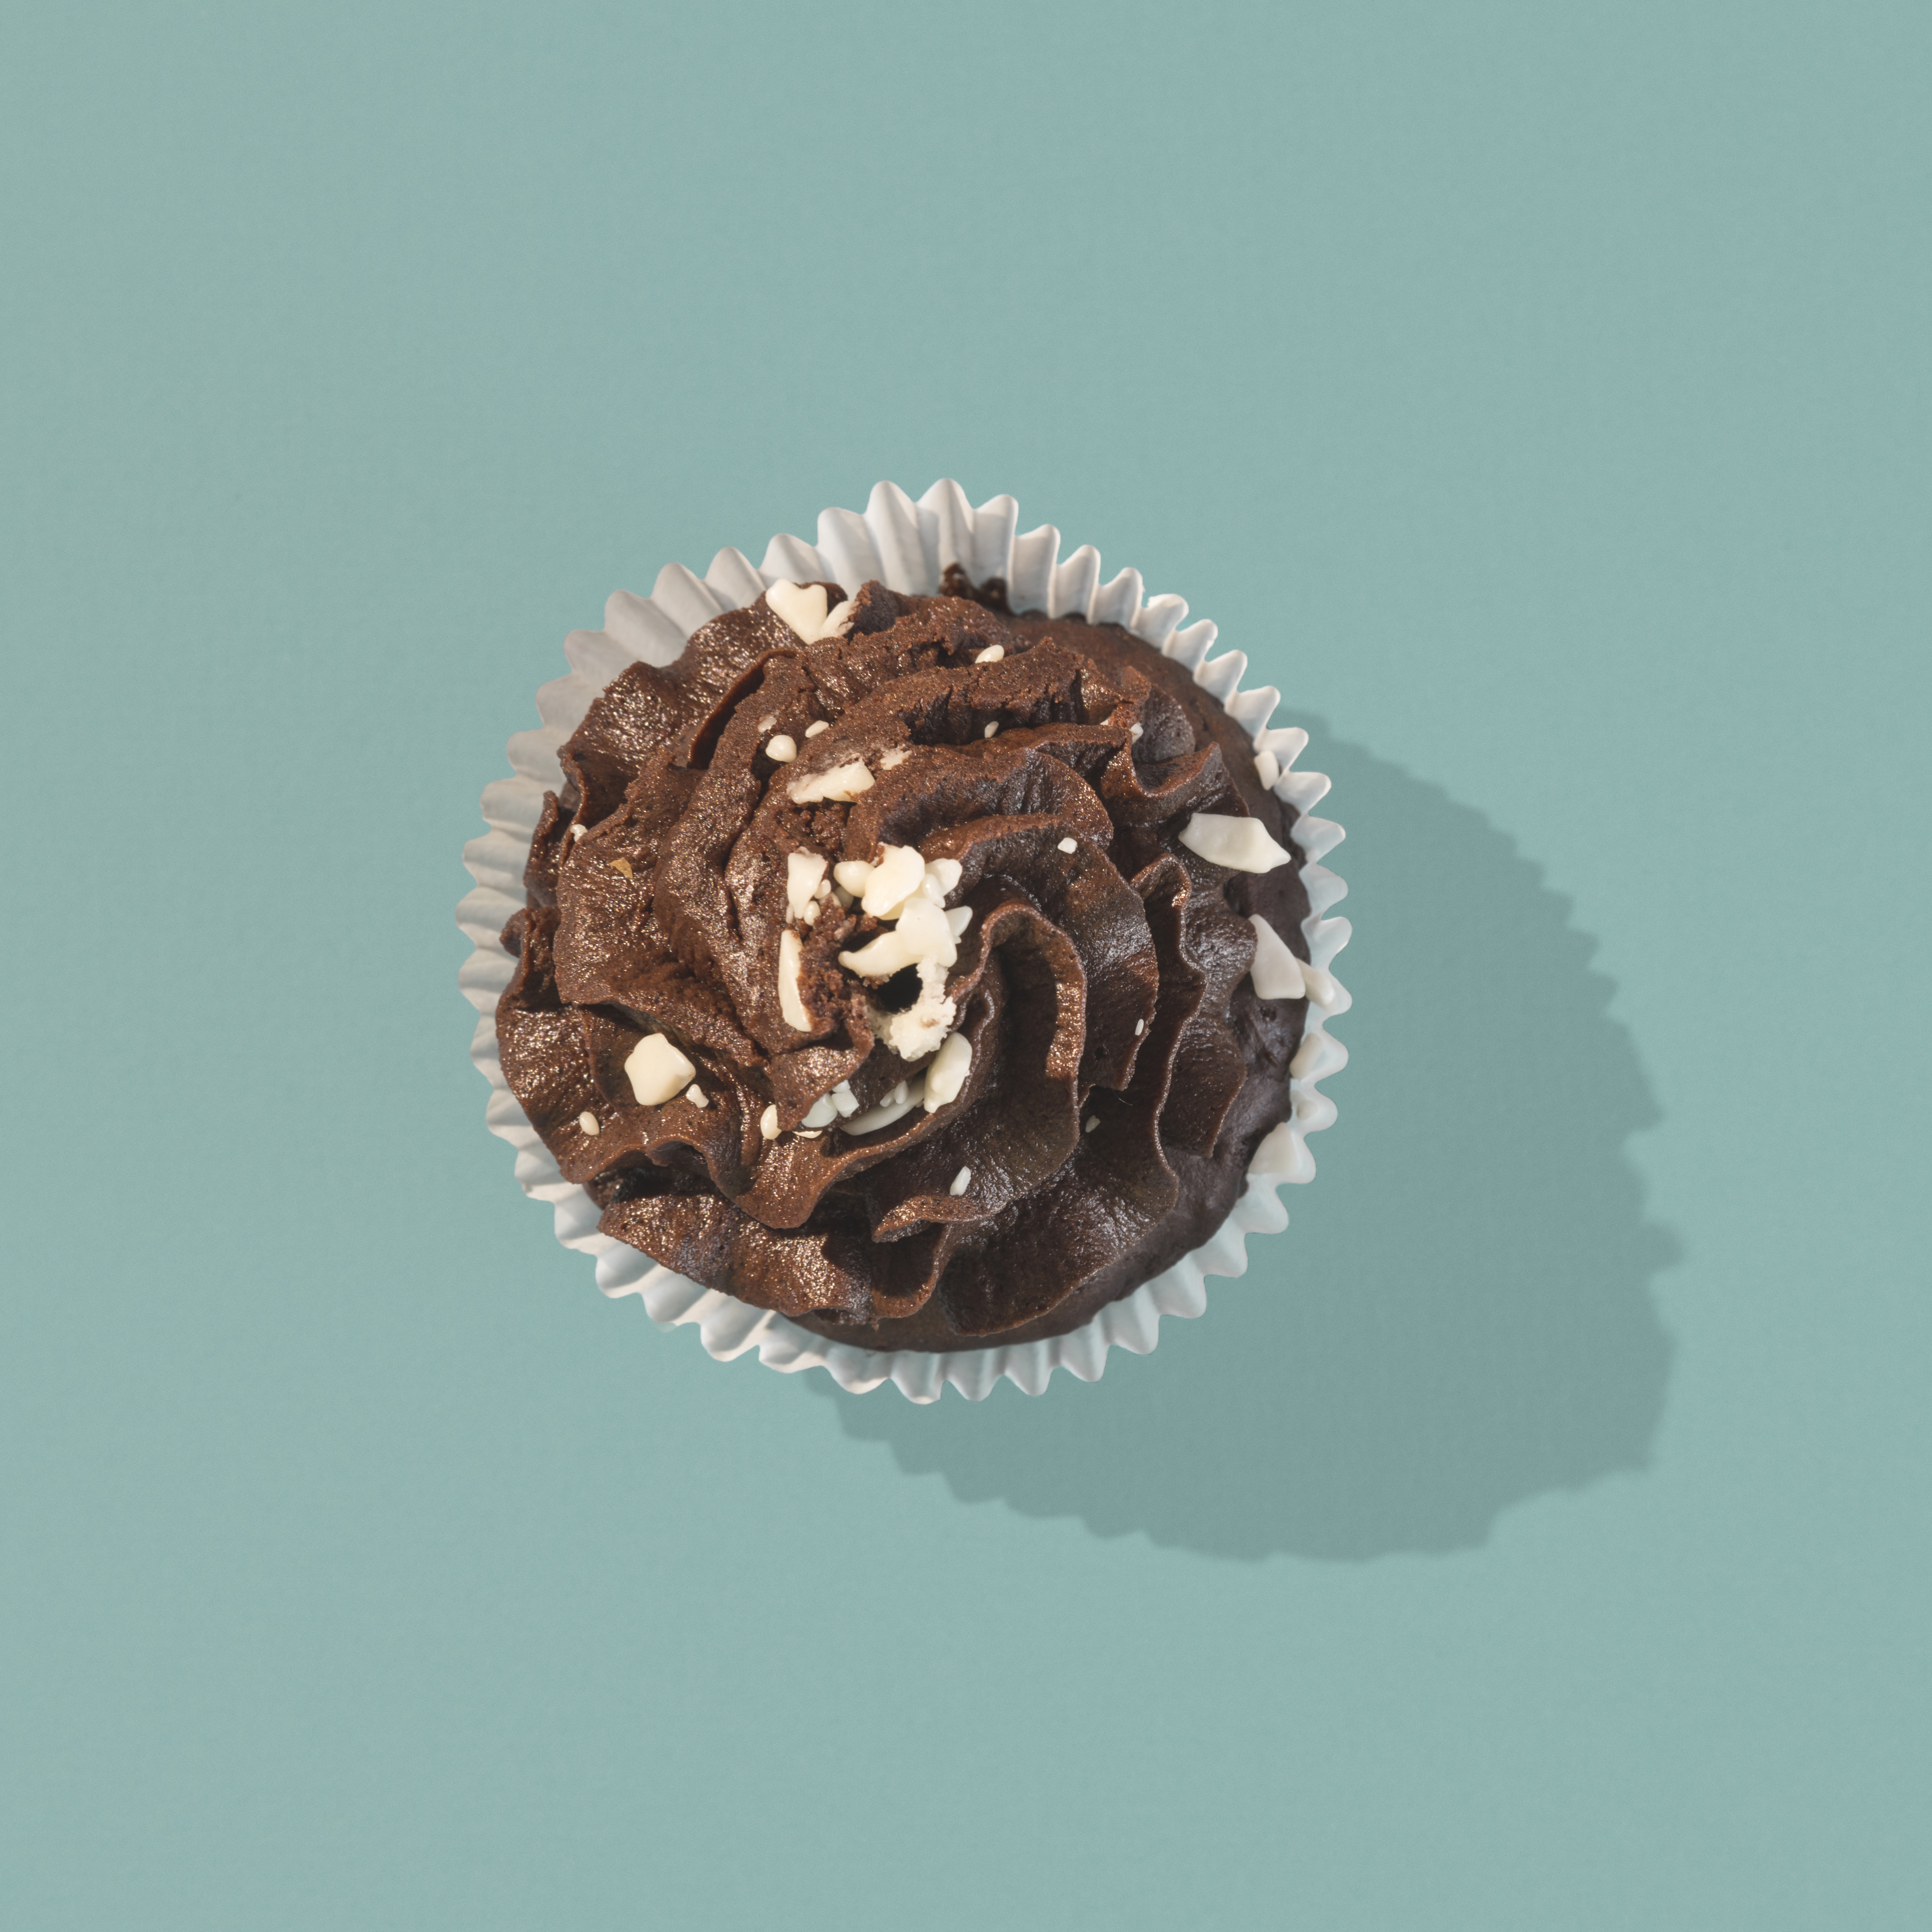 Image of cupcake